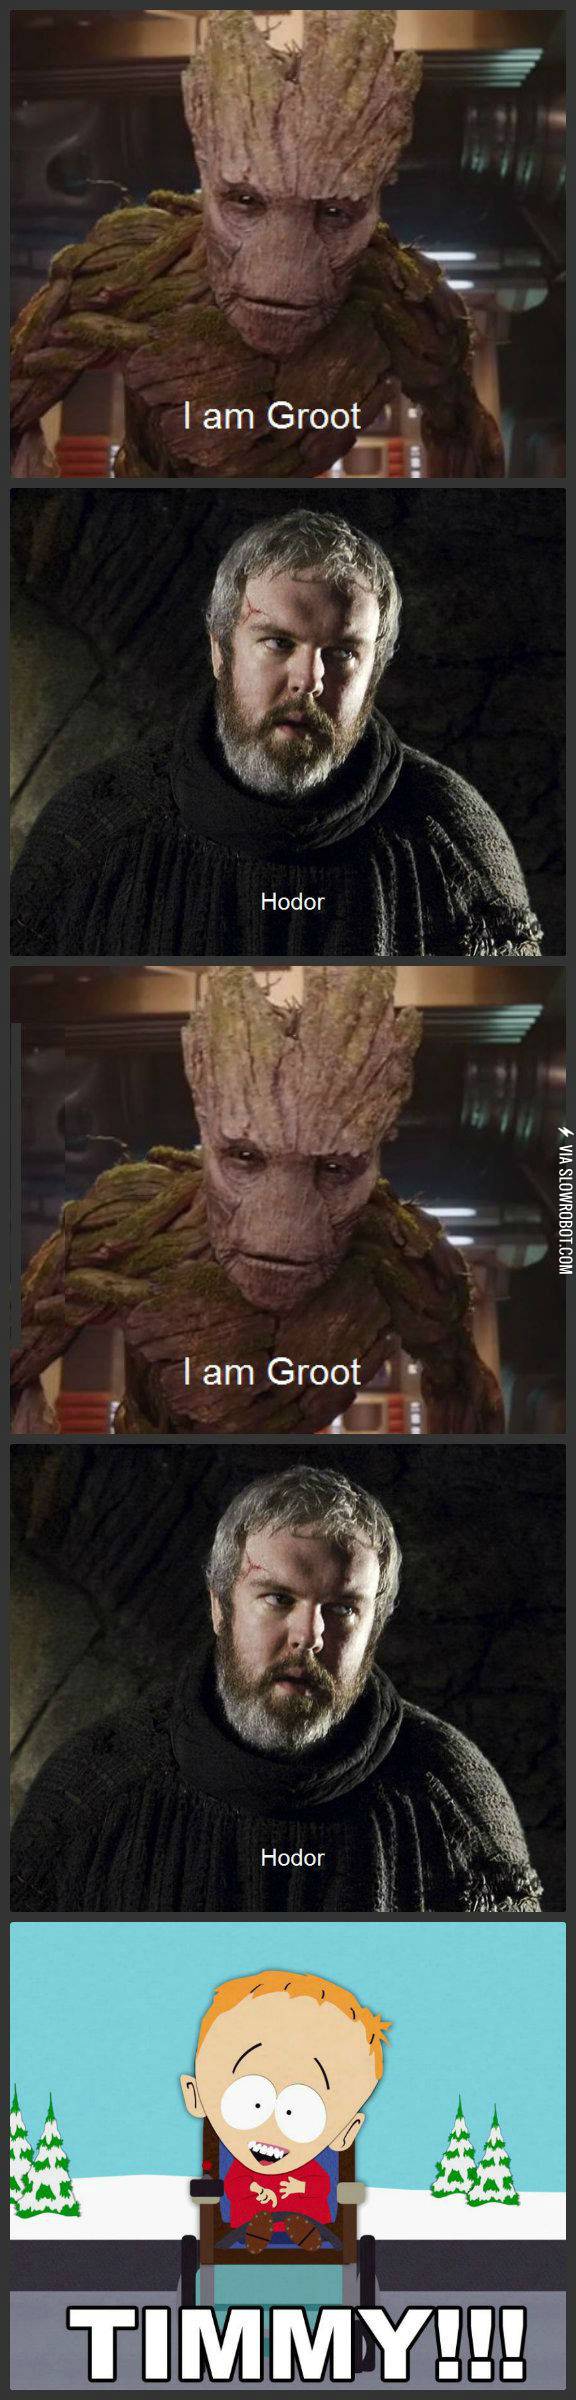 Groot+vs.+Hodor.